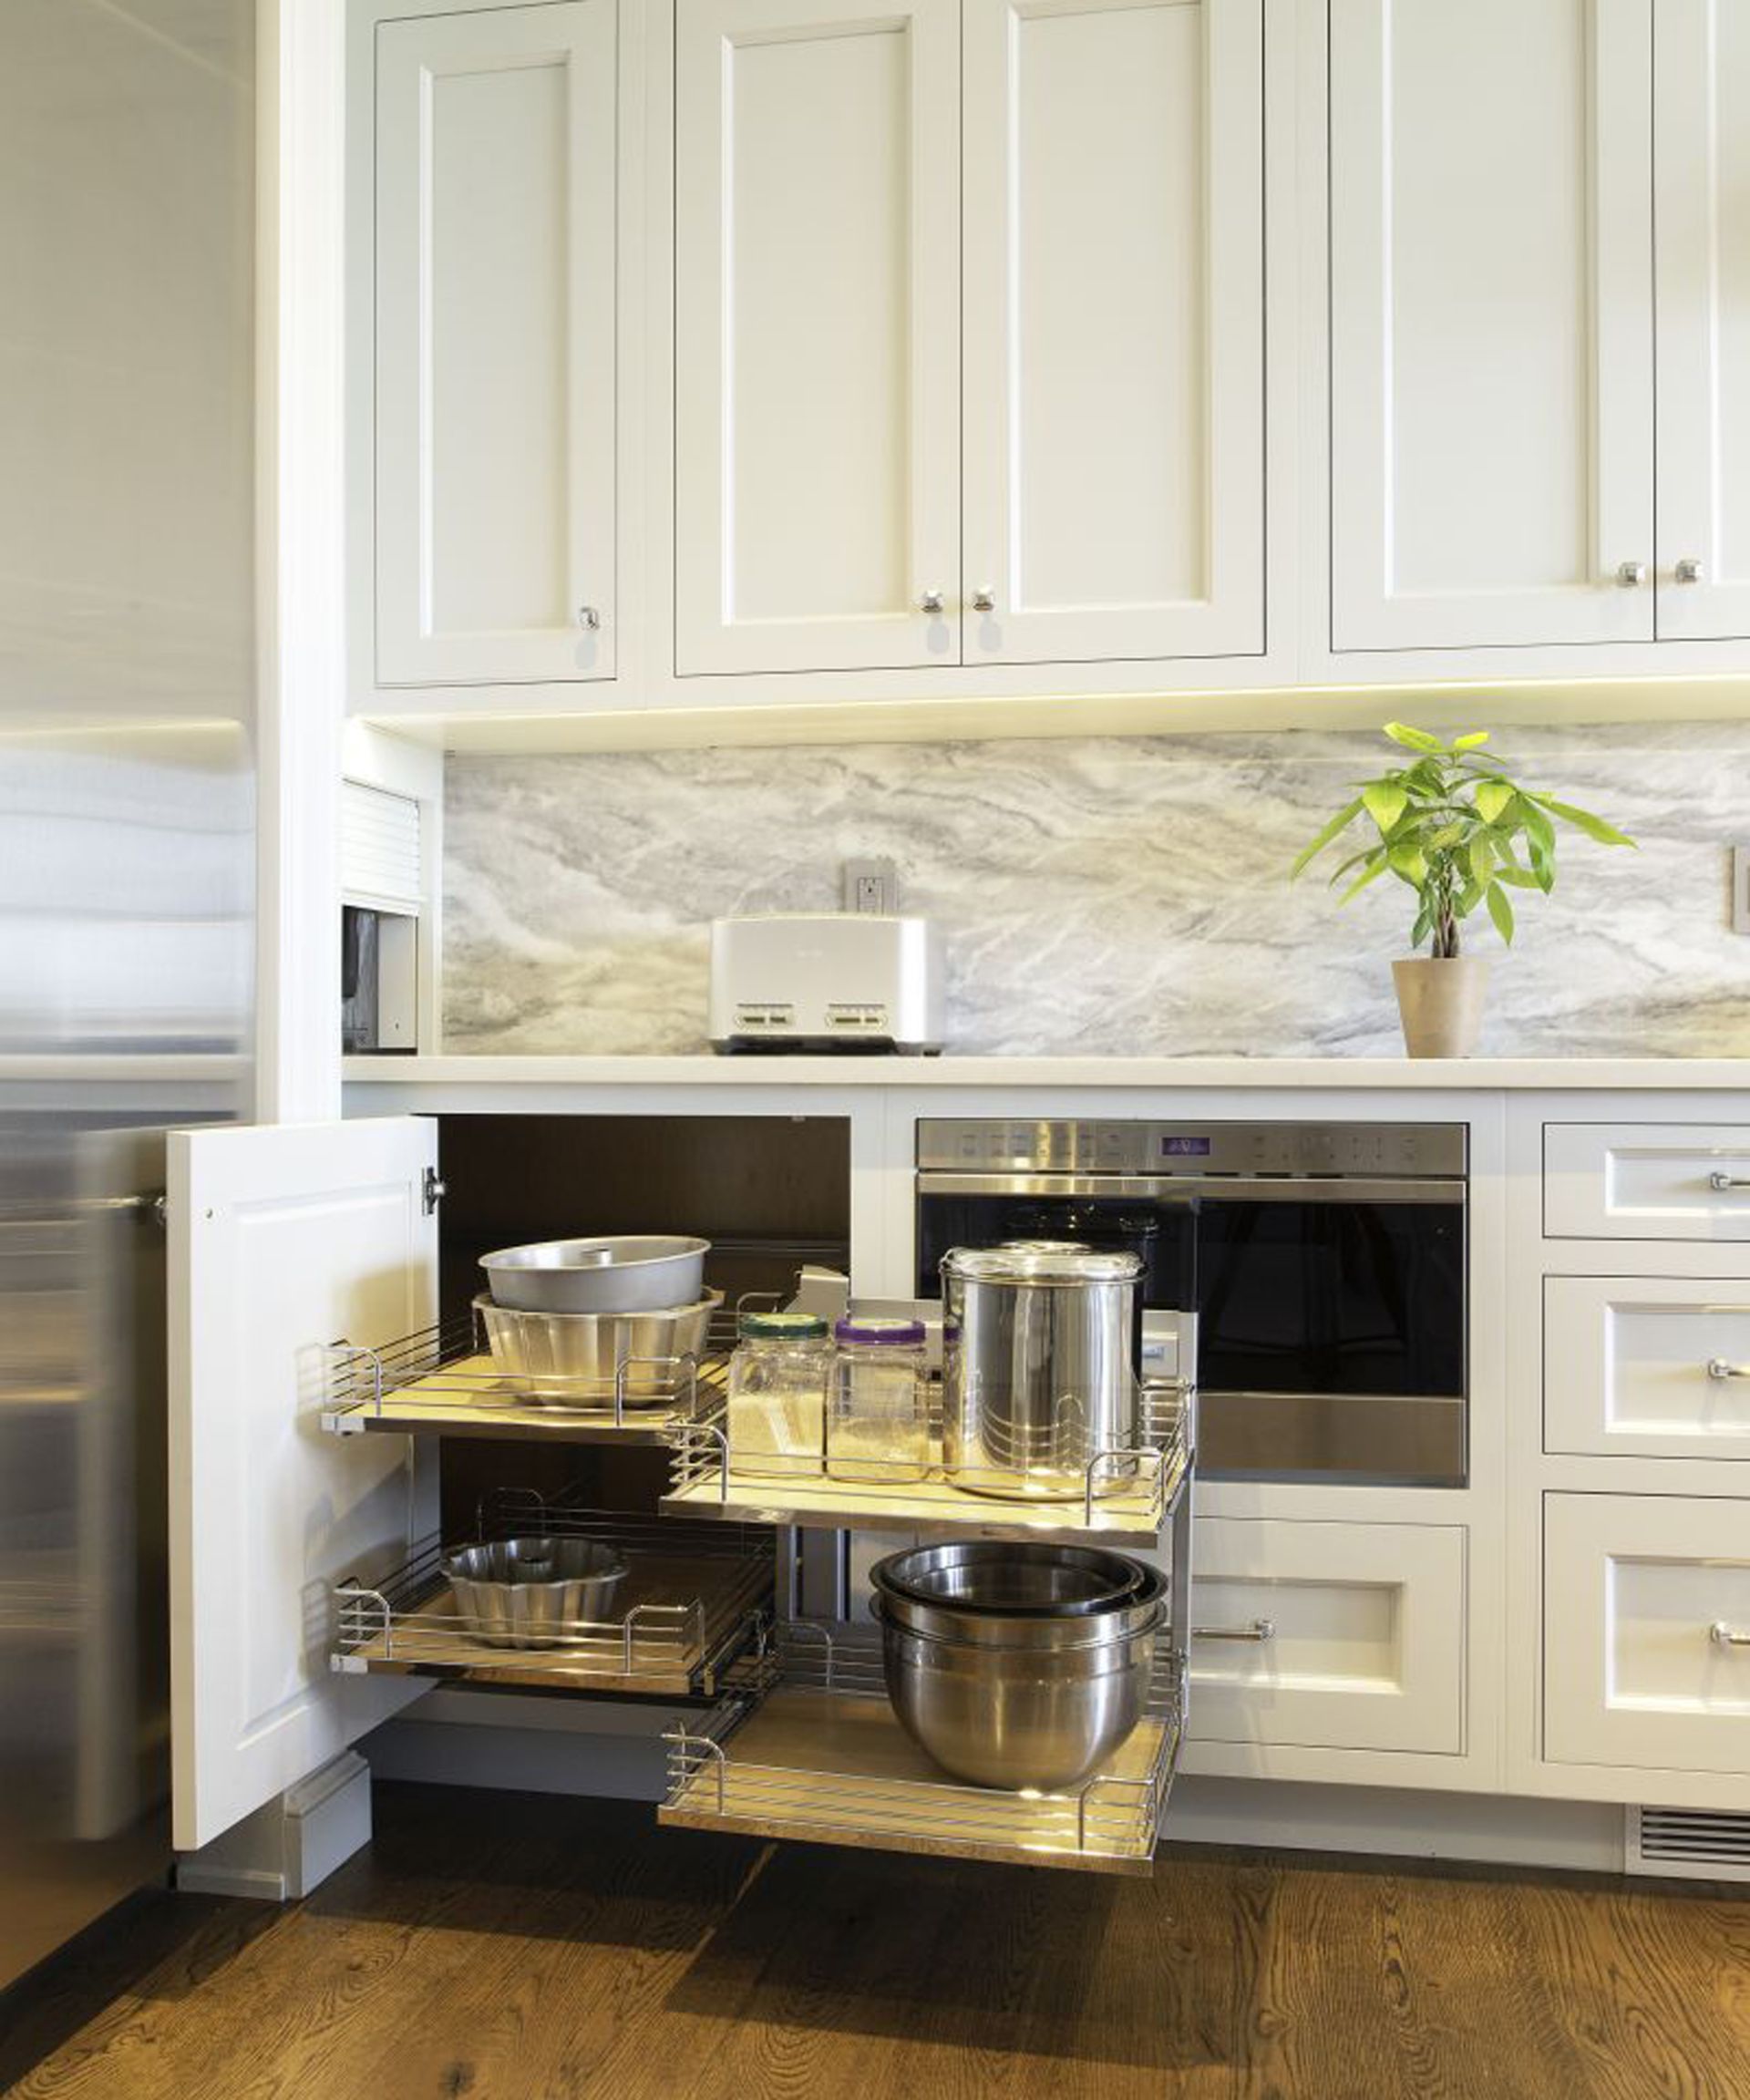 38 kitchen storage ideas to organize your home